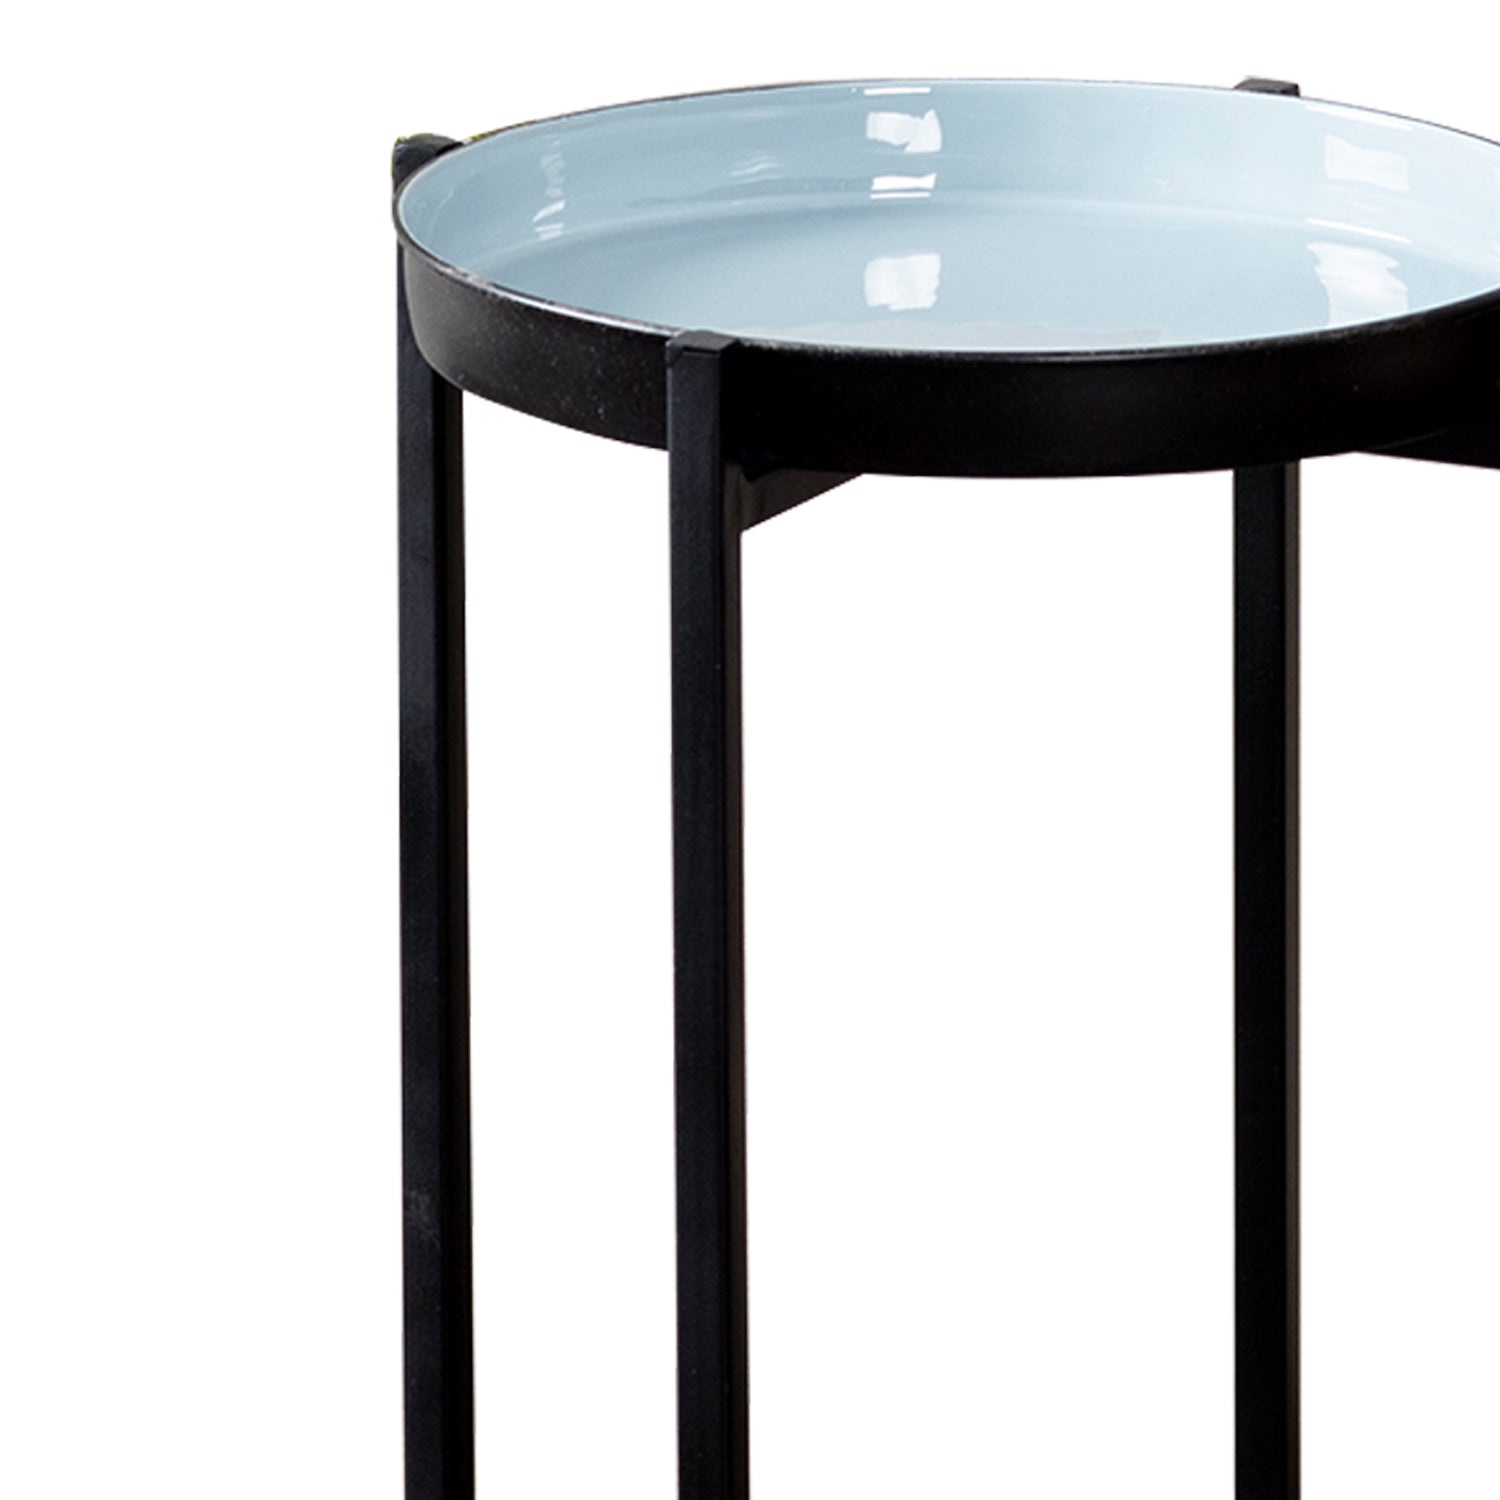 metallic glass side table for living room